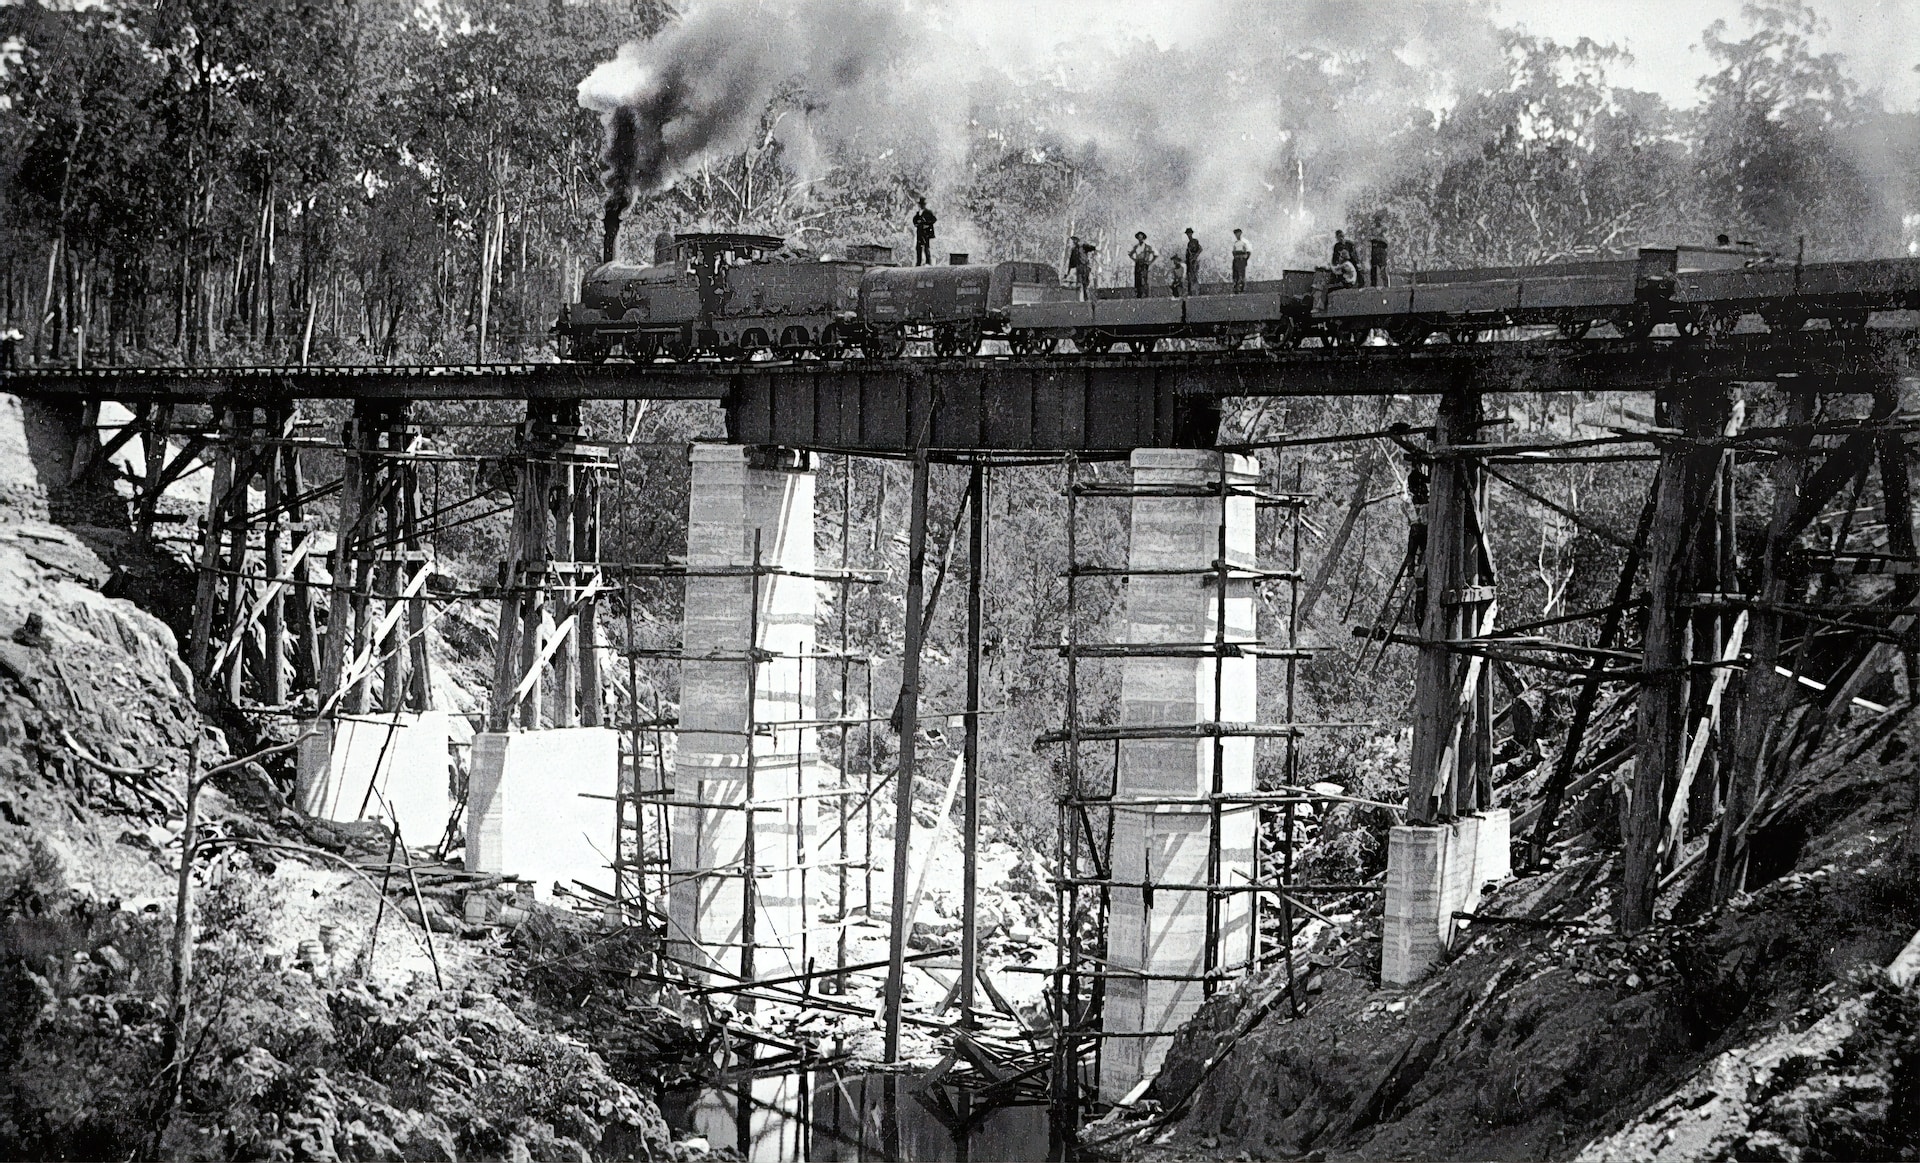 A steam locomotive going over a bridge.